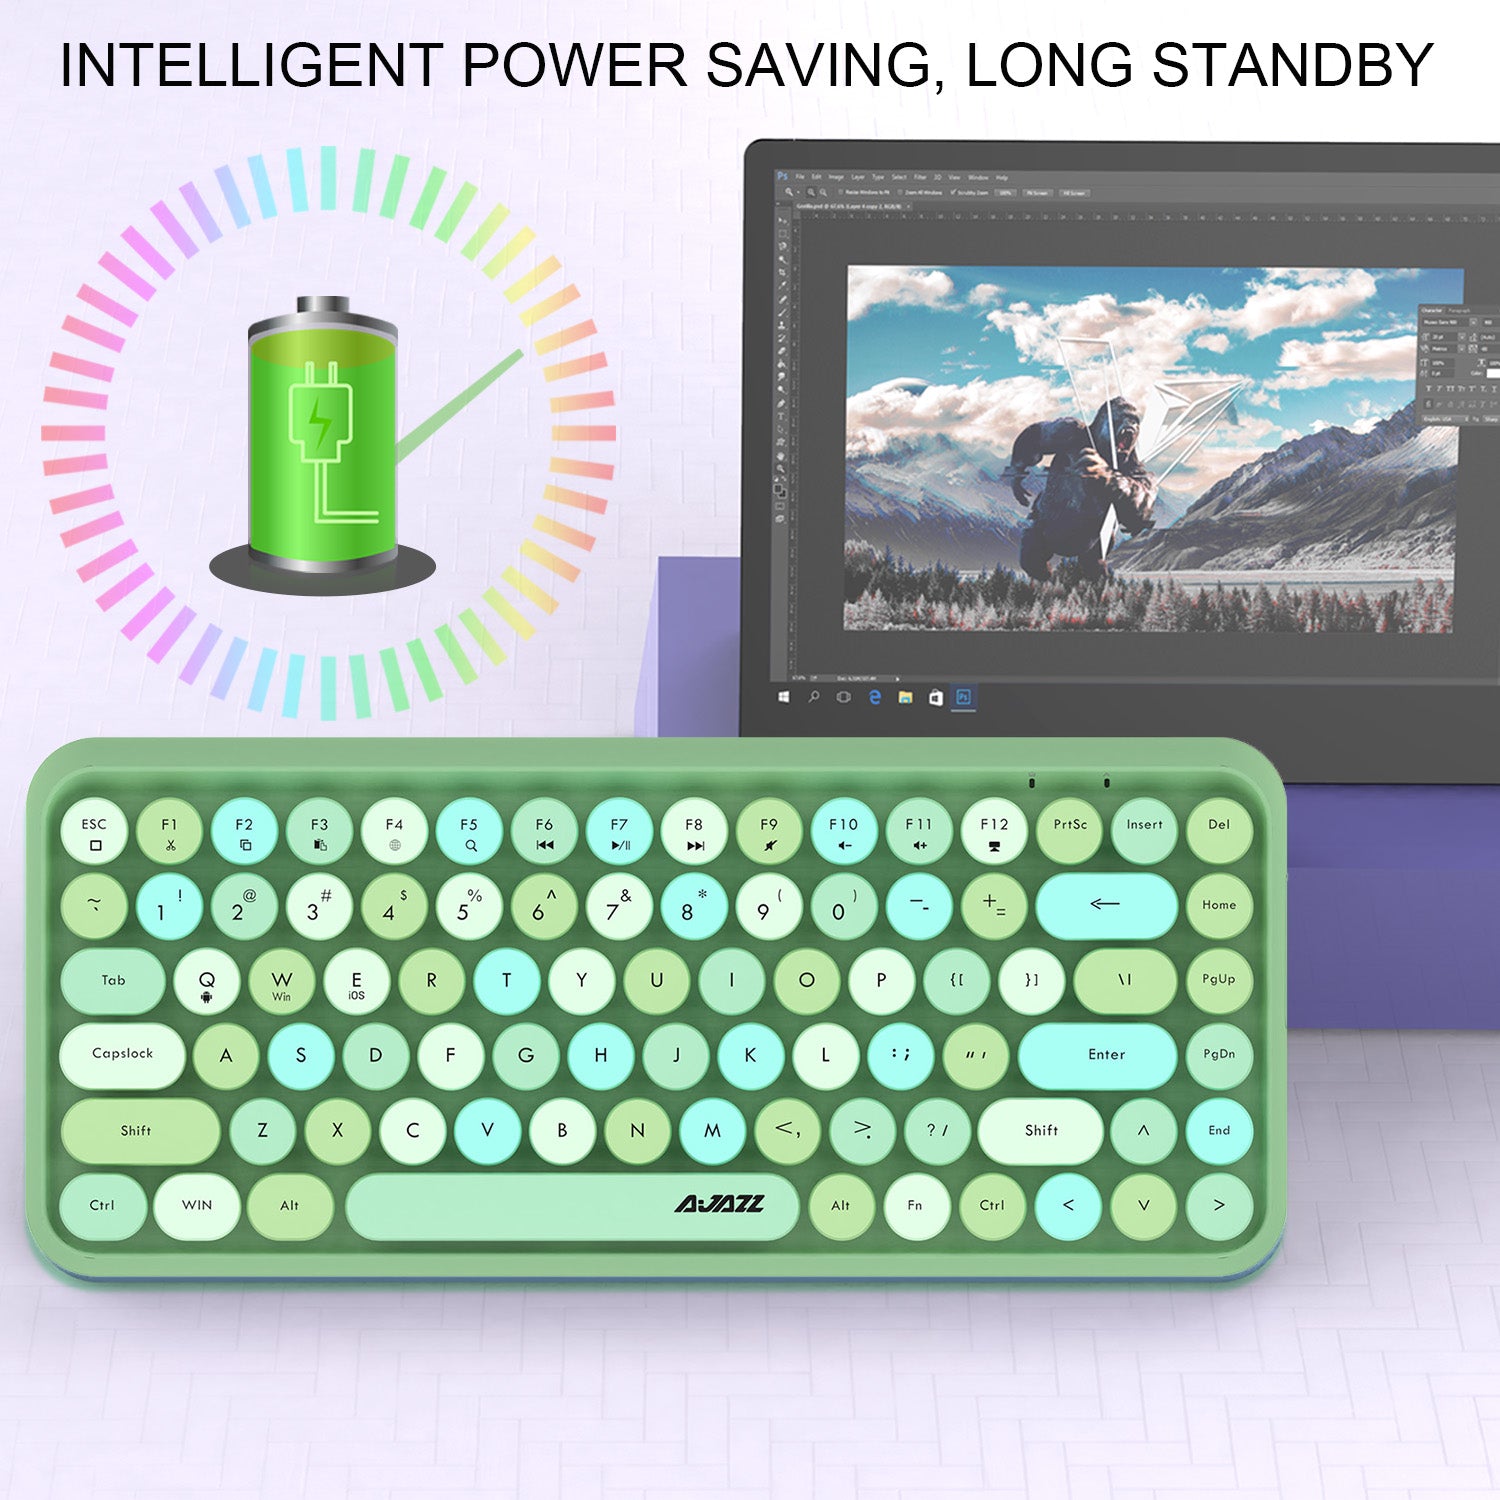 AJAZZ 308i Retro Wireless Keyboard, Cute Round Compact 84 Keys Silent Bluetooth Keyboard, Typewriter Design for iPad, PC, Laptop